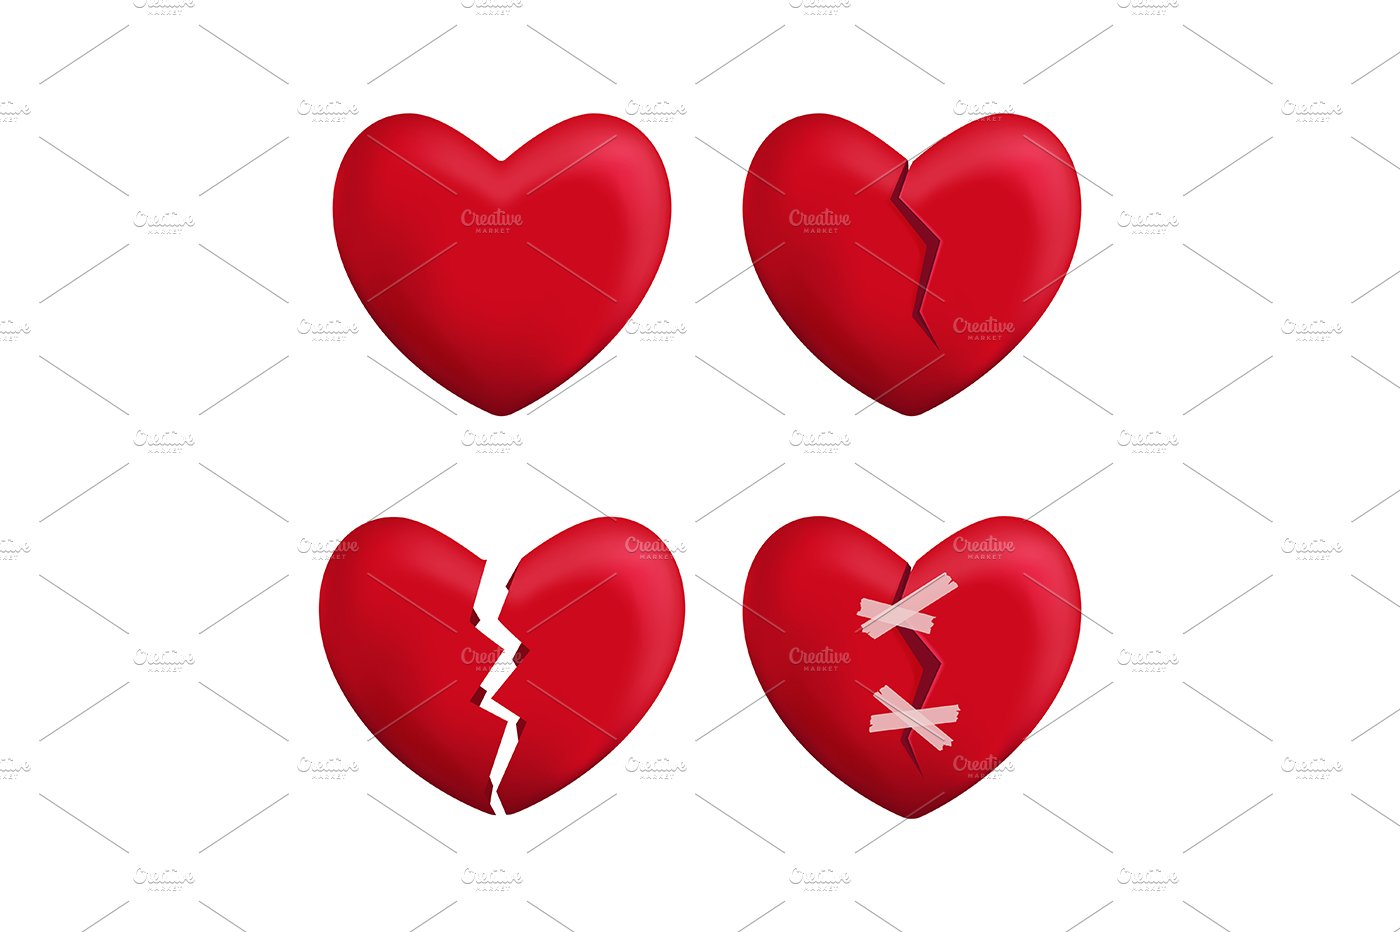 3d Red Broken Hearts Set cover image.